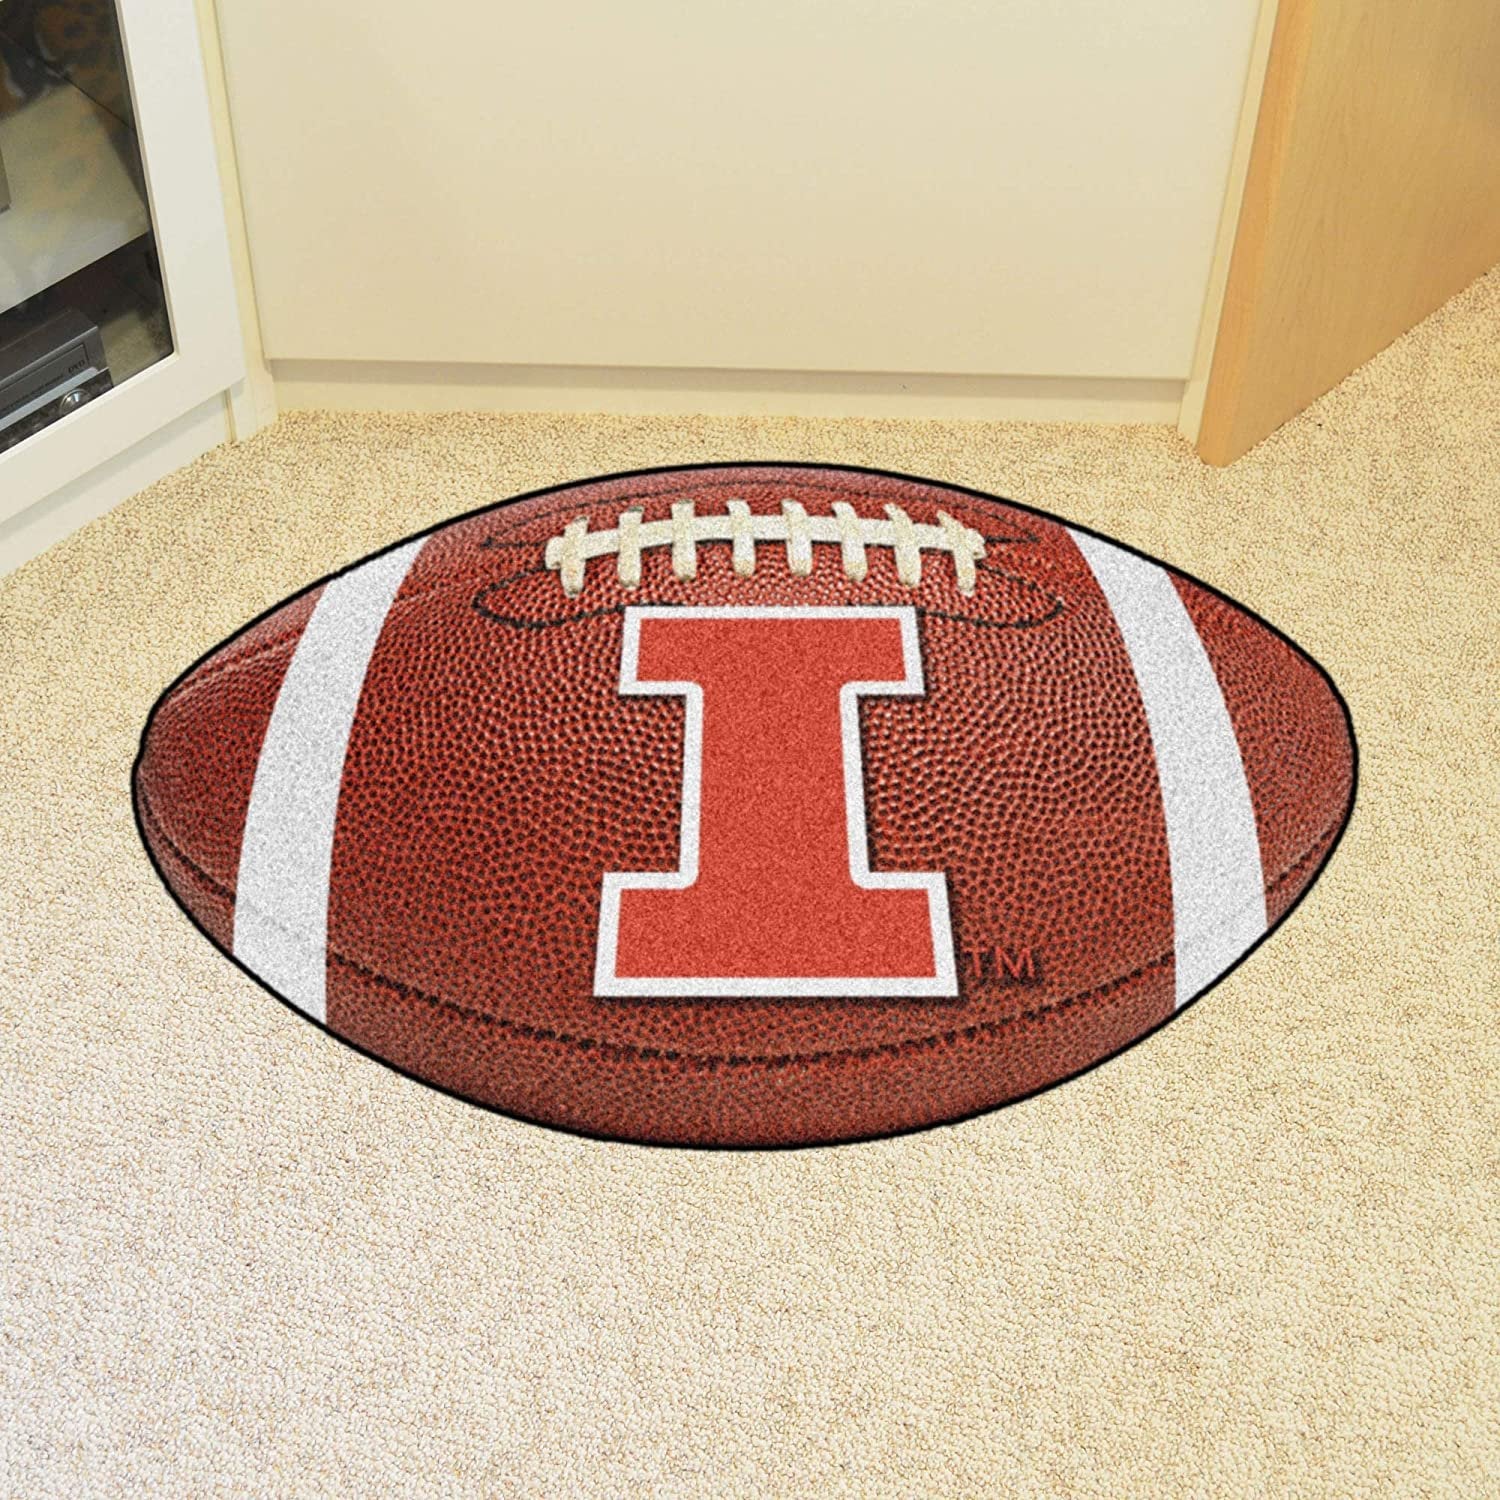 University of Illinois Fighting Illini Floor Mat Area Rug, 20x32 Inch, Non-Skid Backing, Football Design